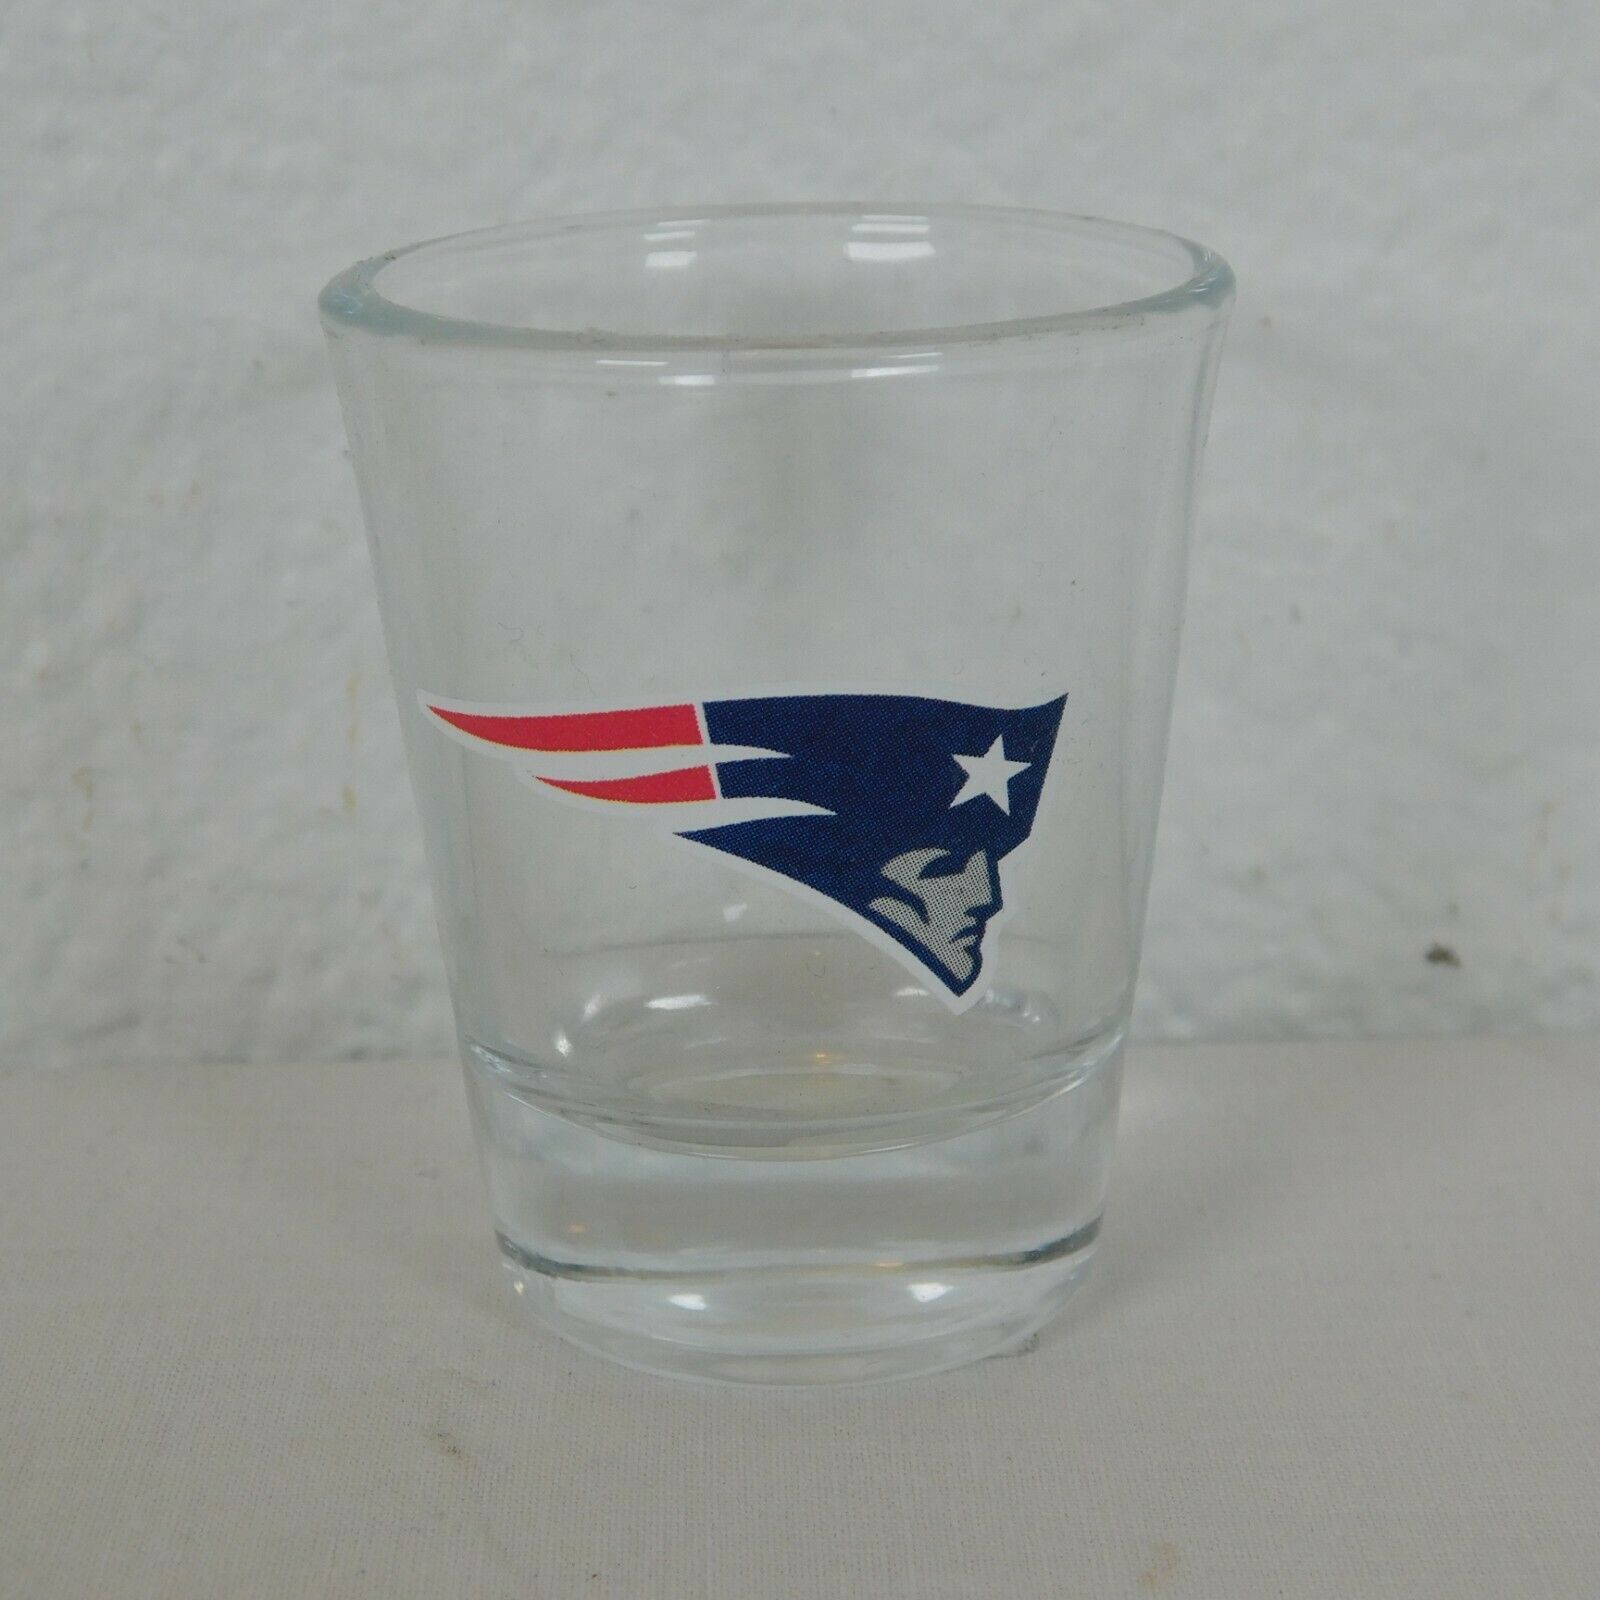 New England Patriots 2 oz Shot Glass 2017 NFL AFC East Foxborough Massachusetts - $9.75